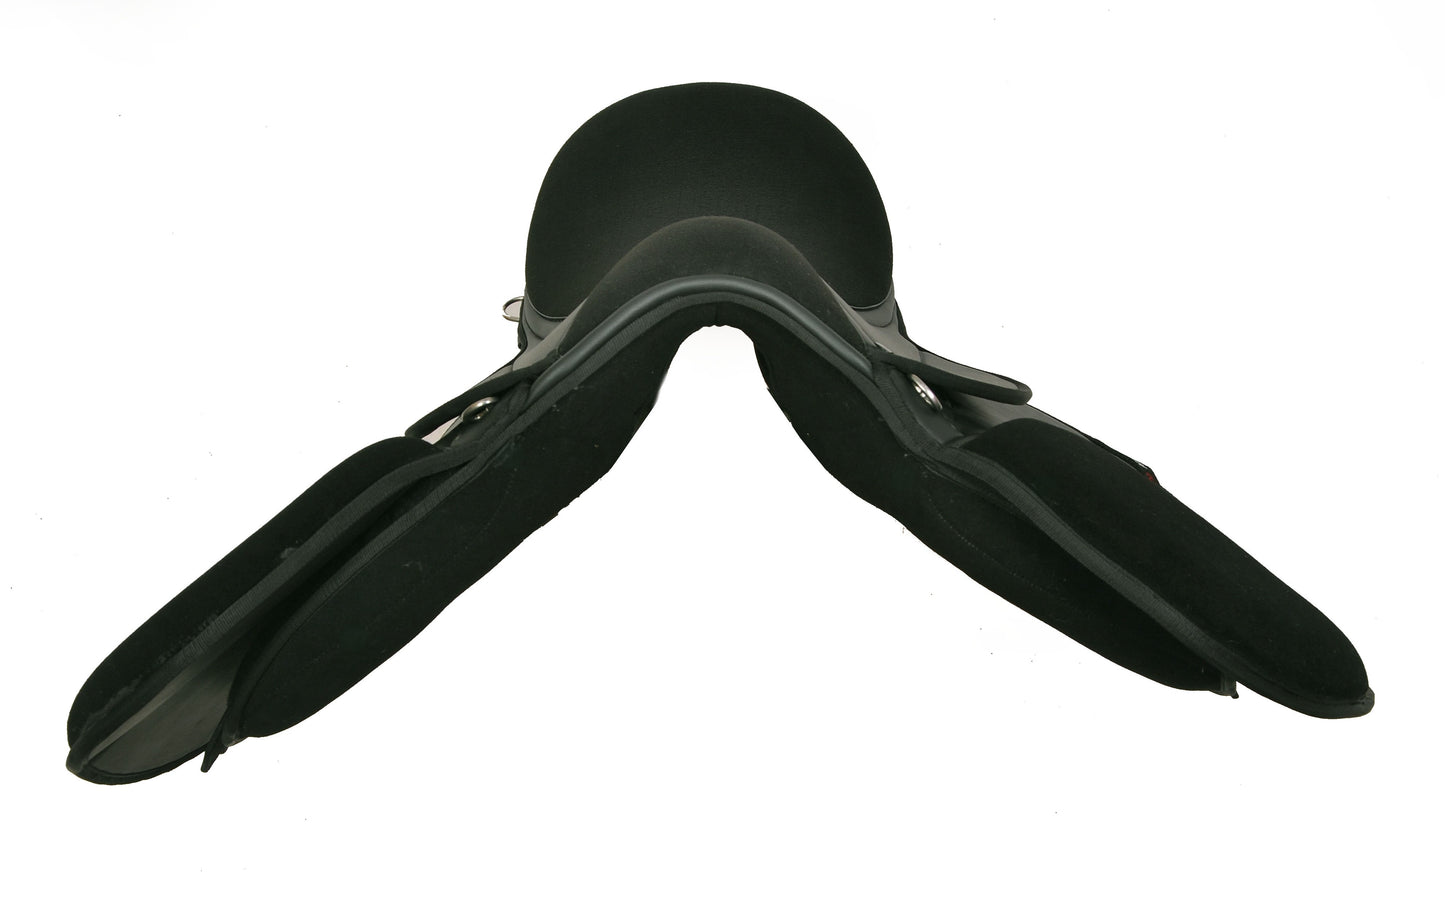 Synthetic Leather GP Halflinger Saddle Black Suede Seat Premium Quality